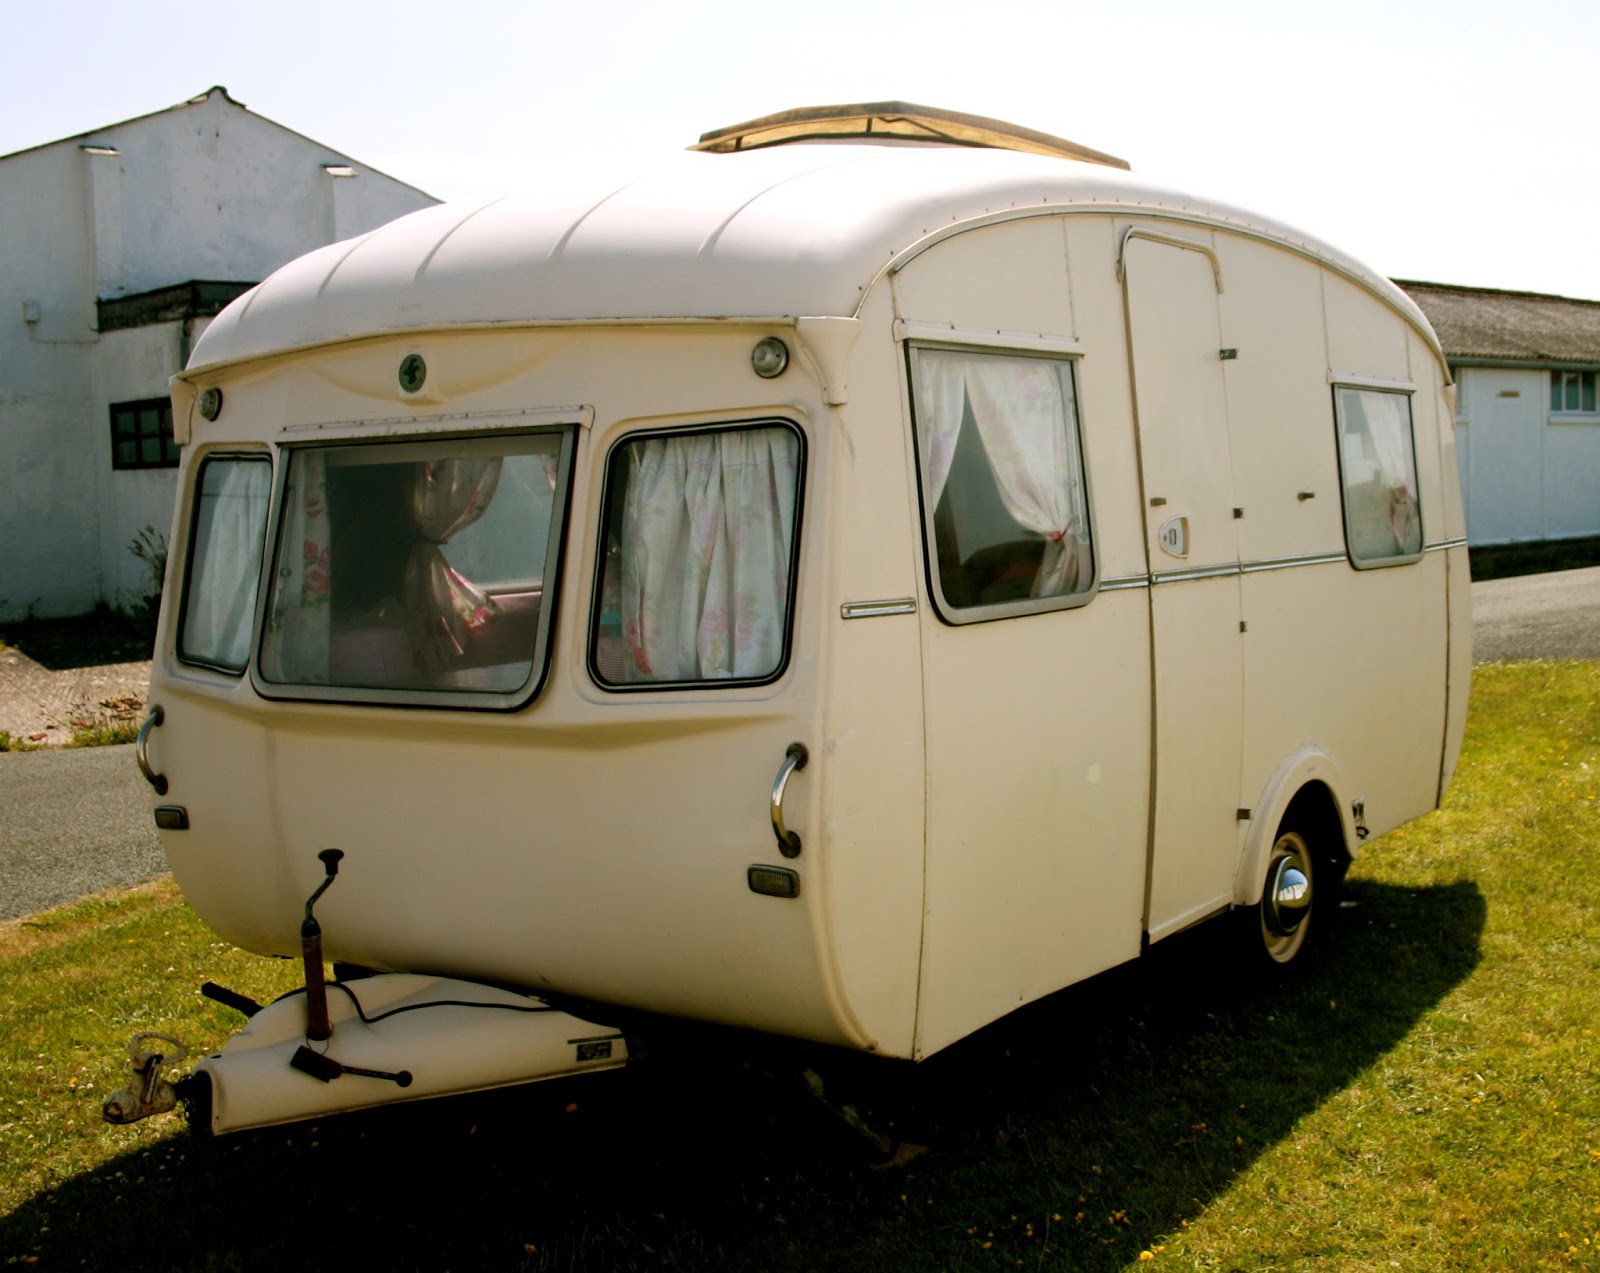 Polly Dolly Vintage "Lola" the latest vintage caravan is